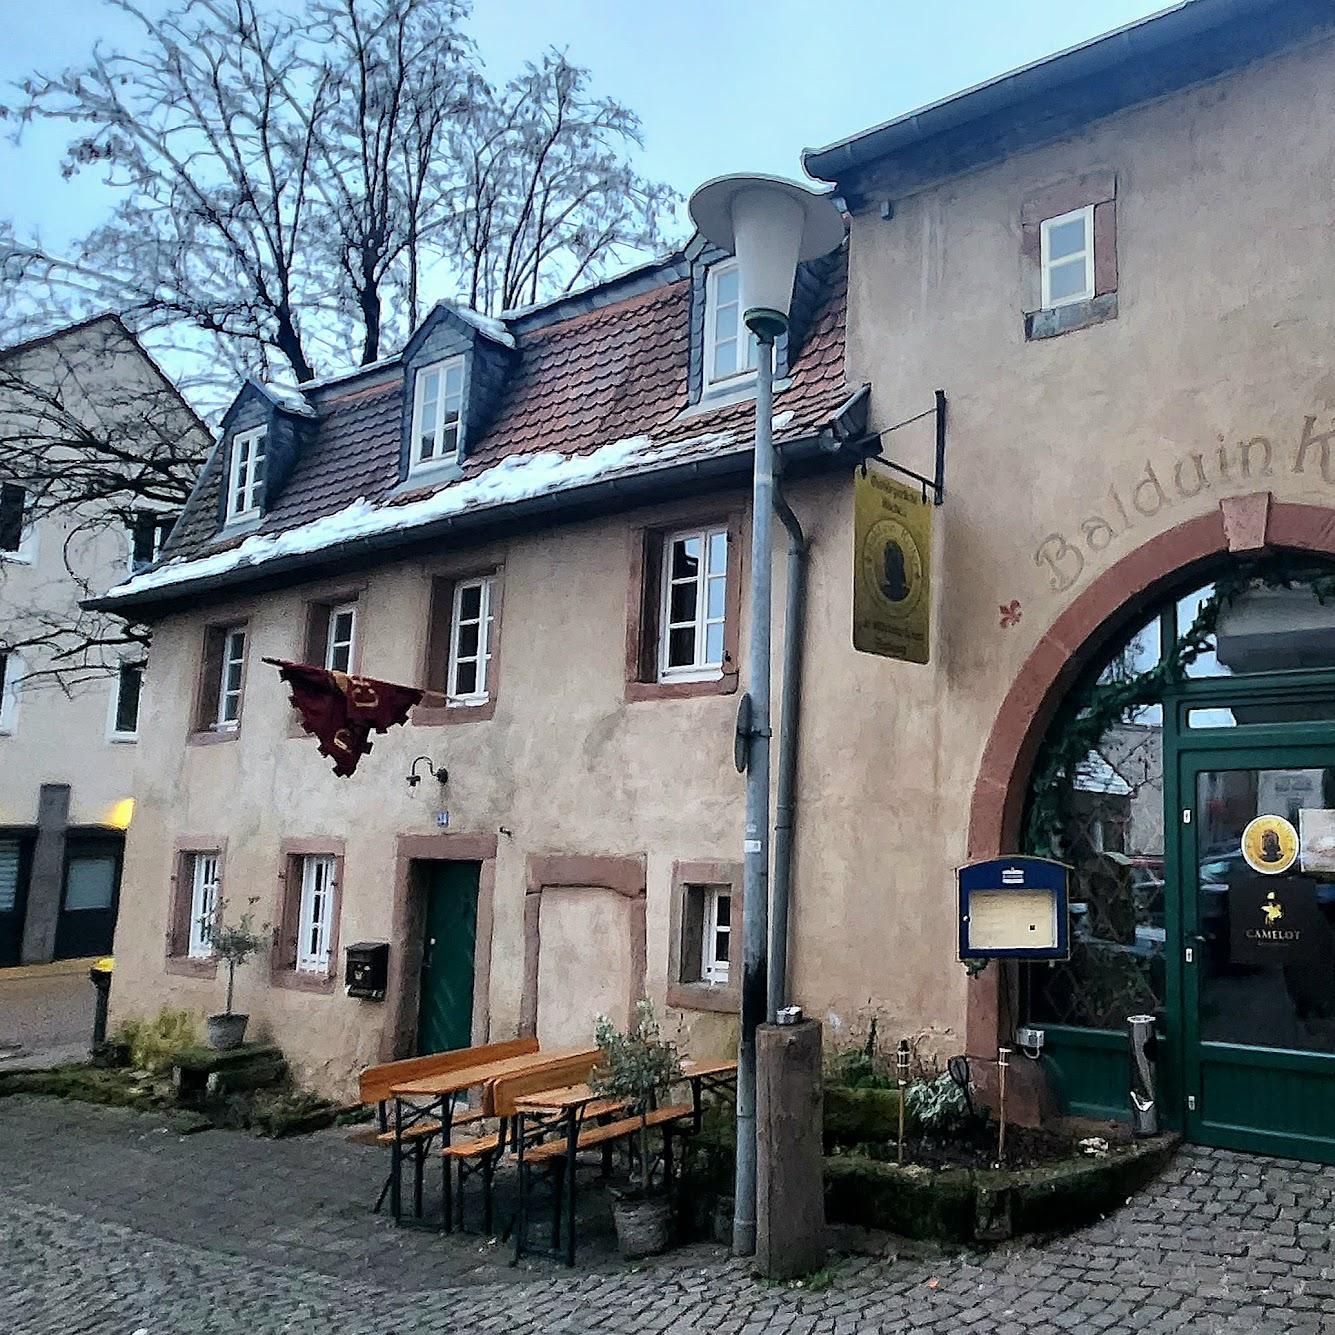 Restaurant "Camelotgastronomie" in Sankt Wendel